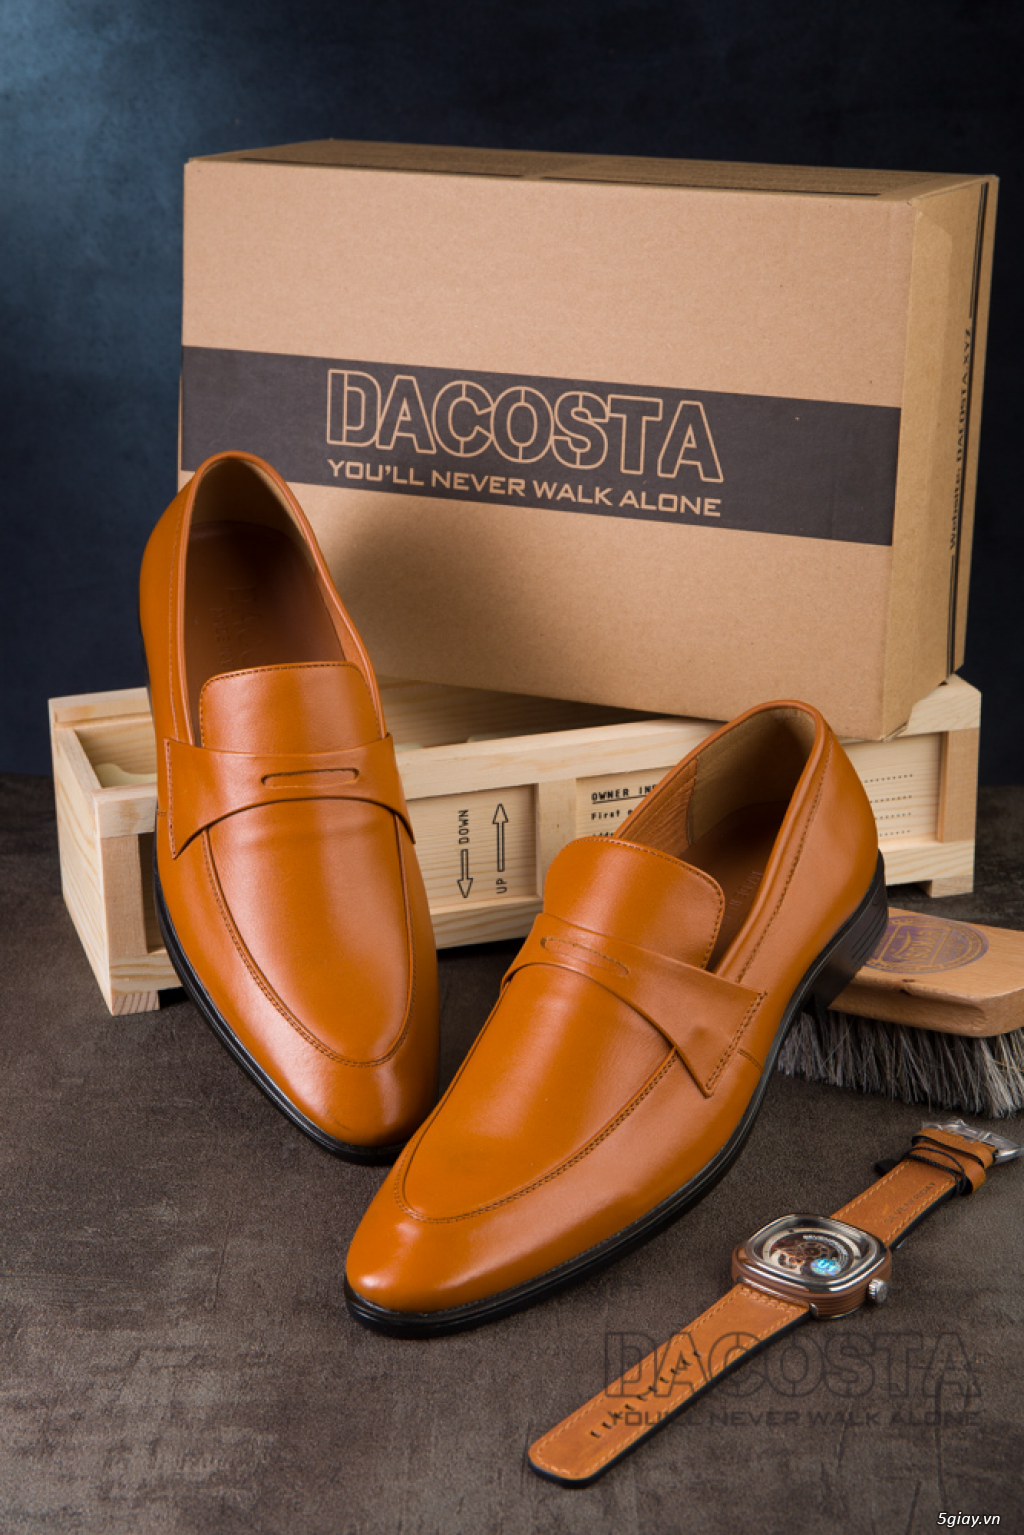 Tiệm Giày Dacosta - Những Mẫu Giày Tây Nam Loafer Hot Nhất 2019 - 39